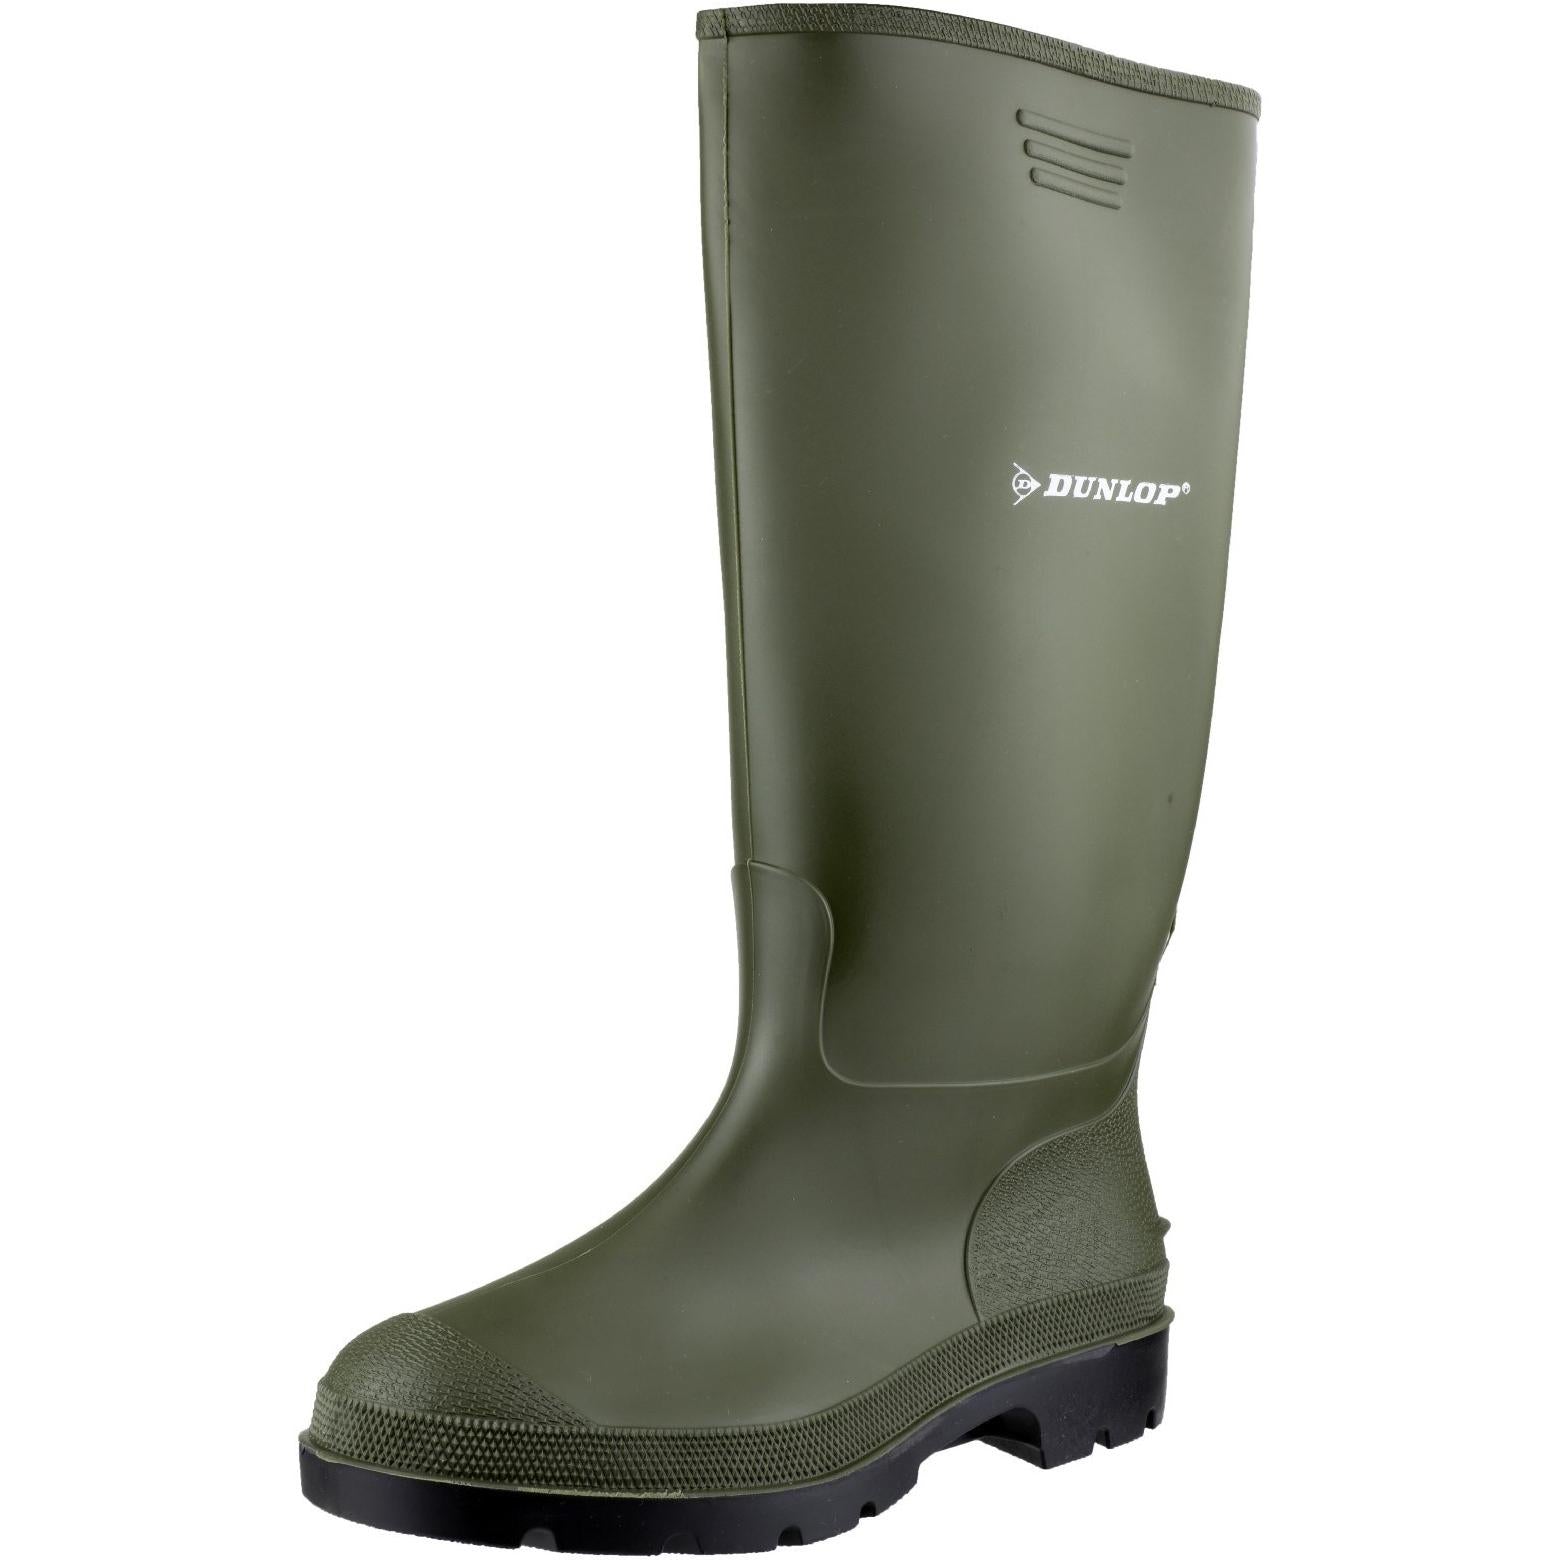 Dunlop Pricemastor Wellington Boots